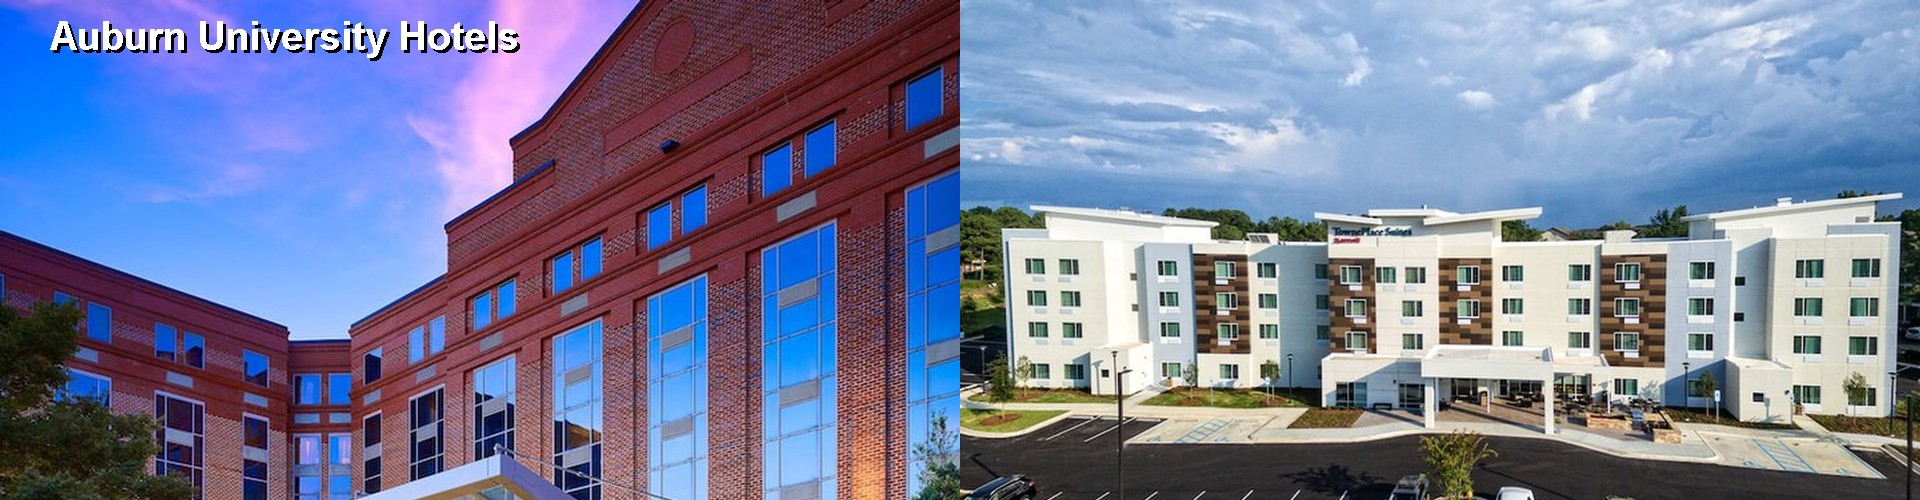 4 Best Hotels near Auburn University